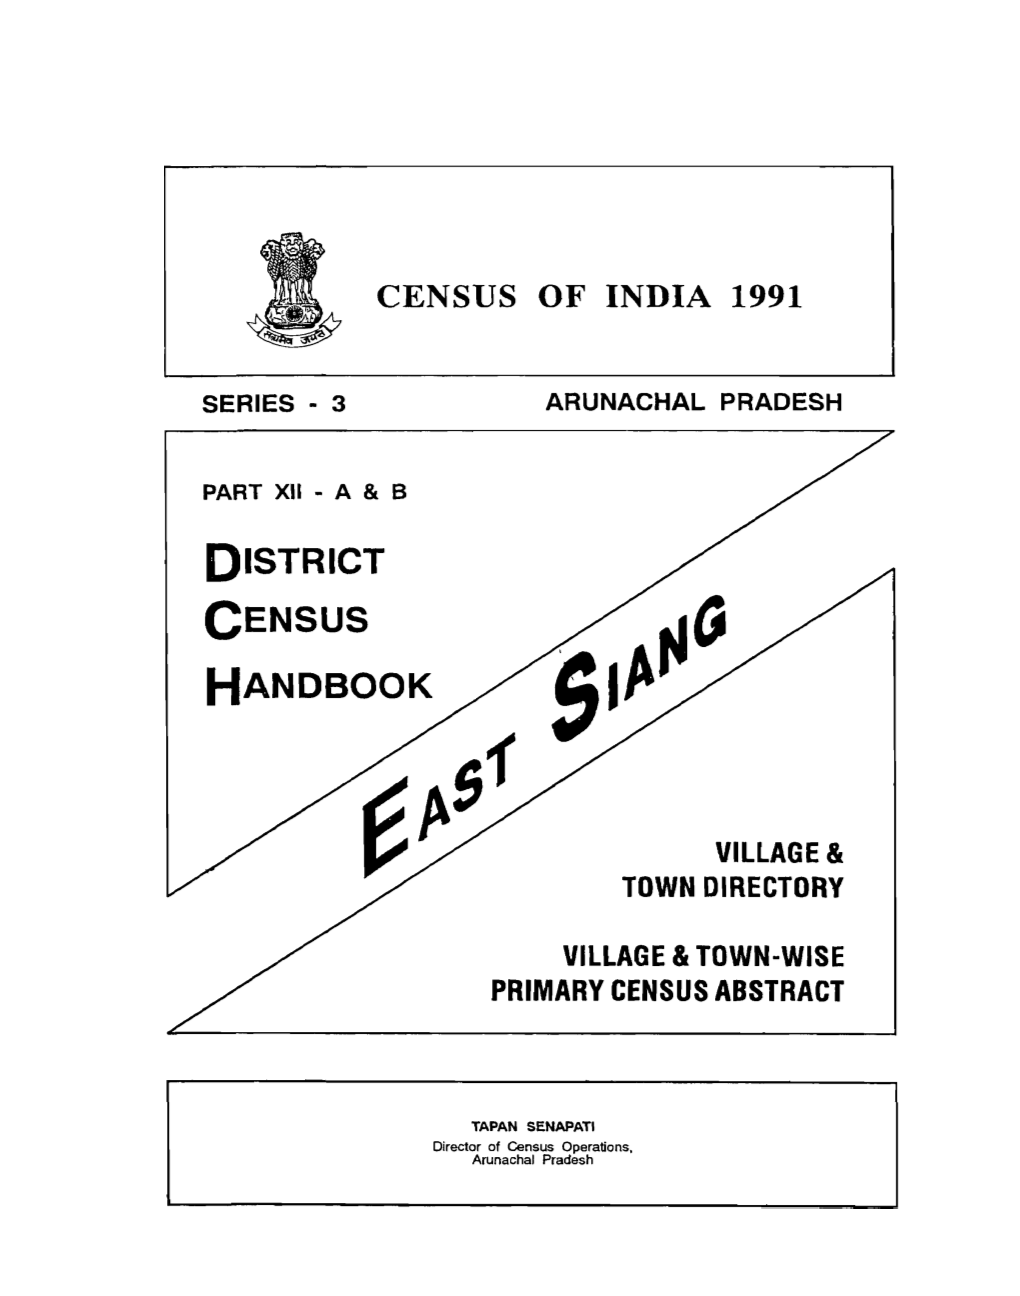 District Census Handbook, East Siang, Part XII a & B, Series-3, Arunachal